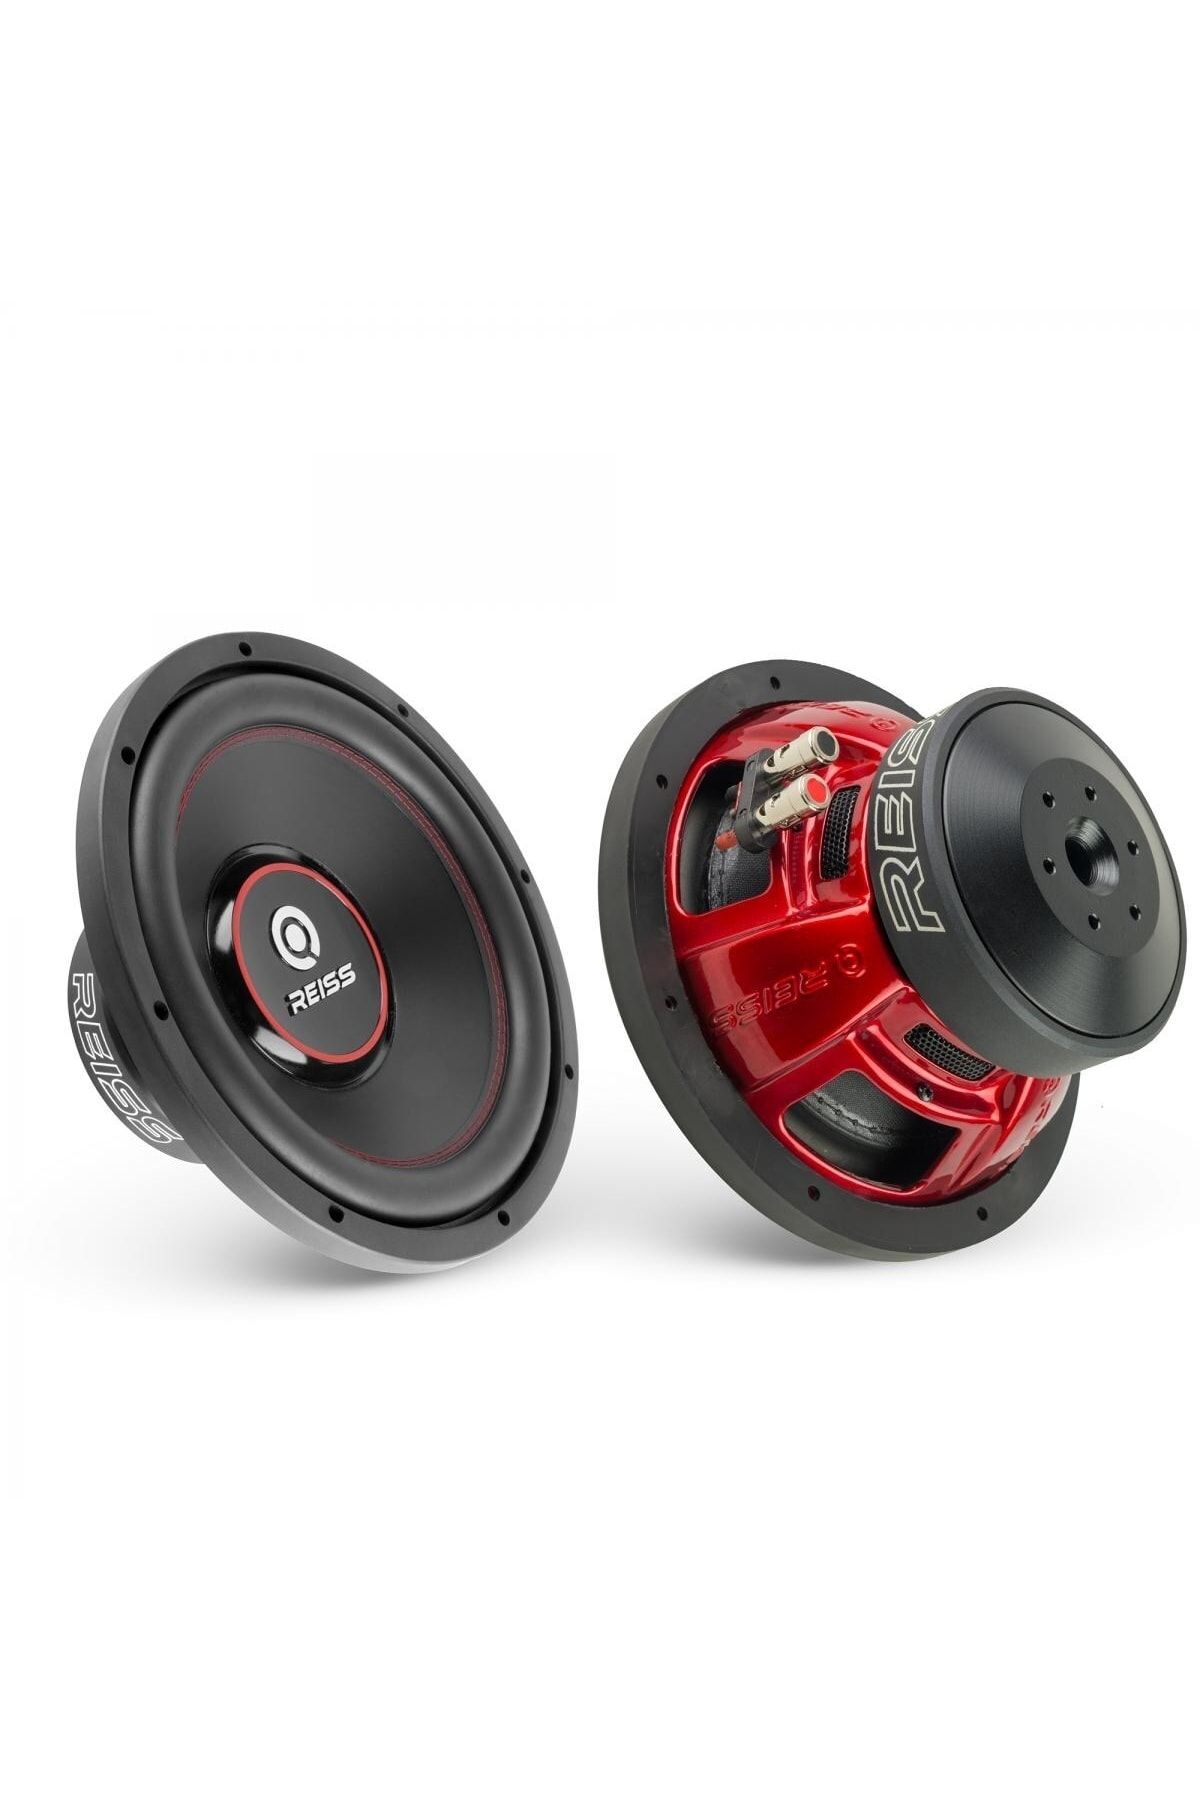 Soundmax Reiss Audio Rs-hk12 Subwoofer Bass